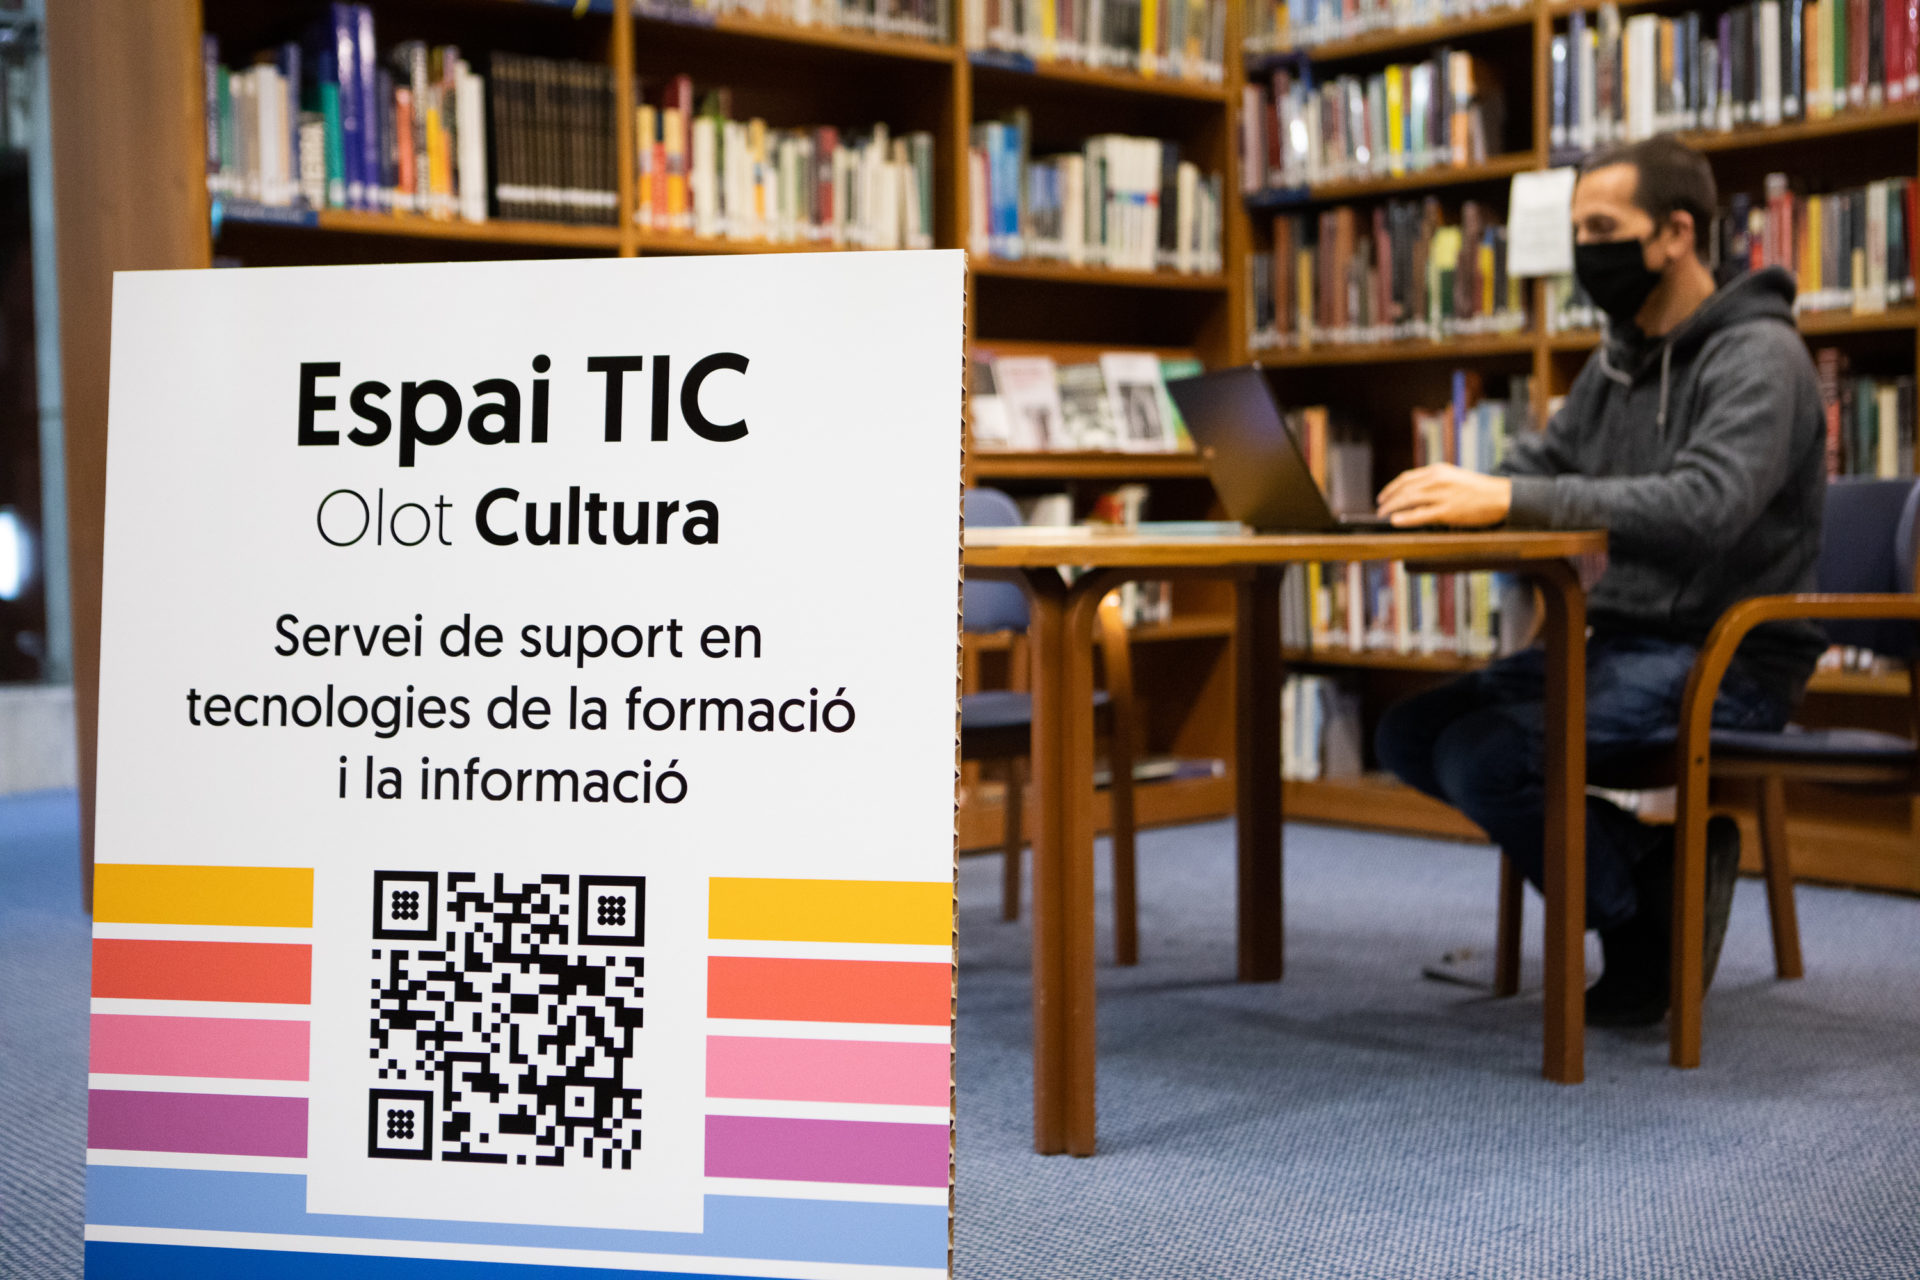 Espai TIC, a la Biblioteca Marià Vayreda. Foto: Martí Albesa